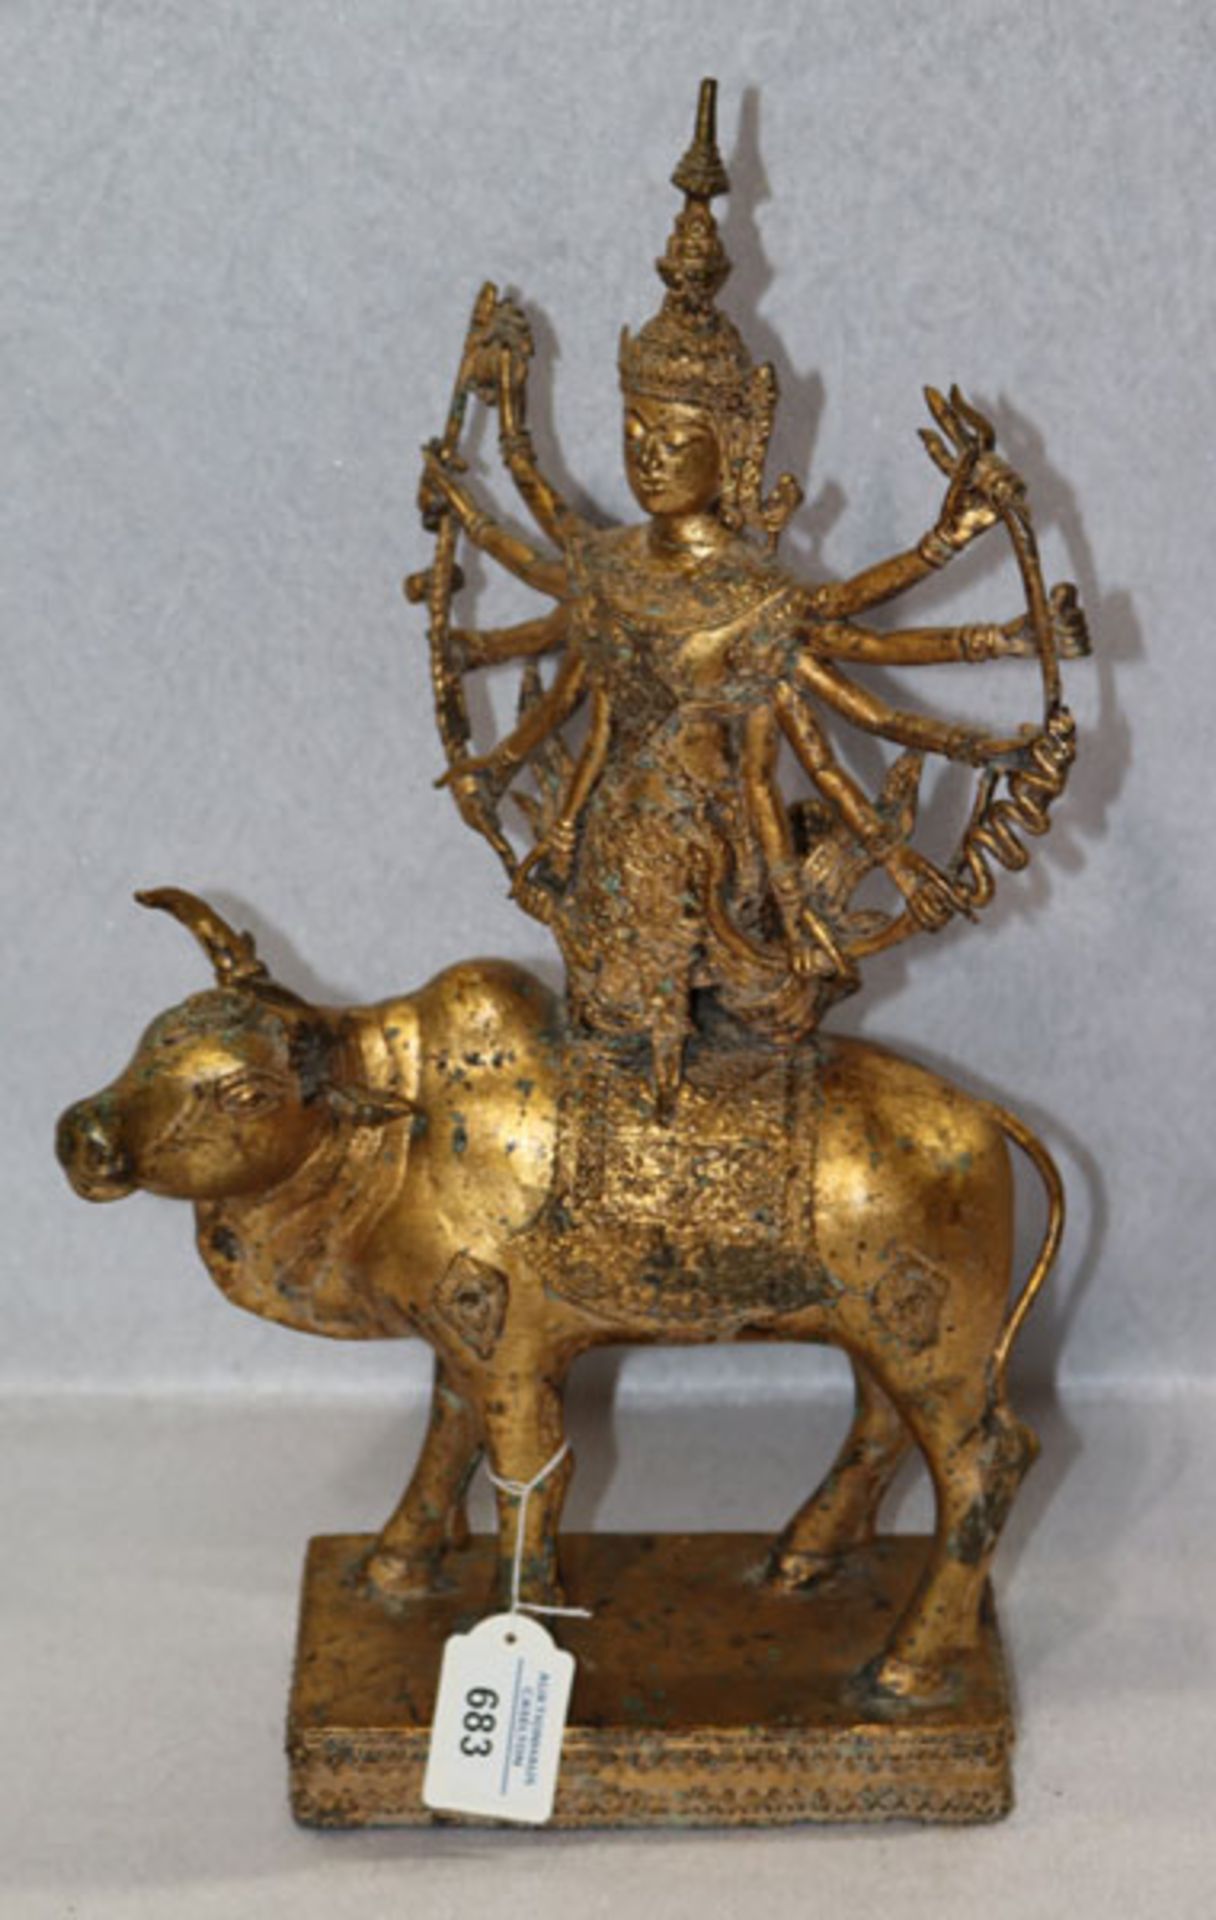 Figurenskulptur, Metallguß 'Shiva auf Stier', Thailand, Vergoldung teils berieben, H 45 cm, B 25 cm,